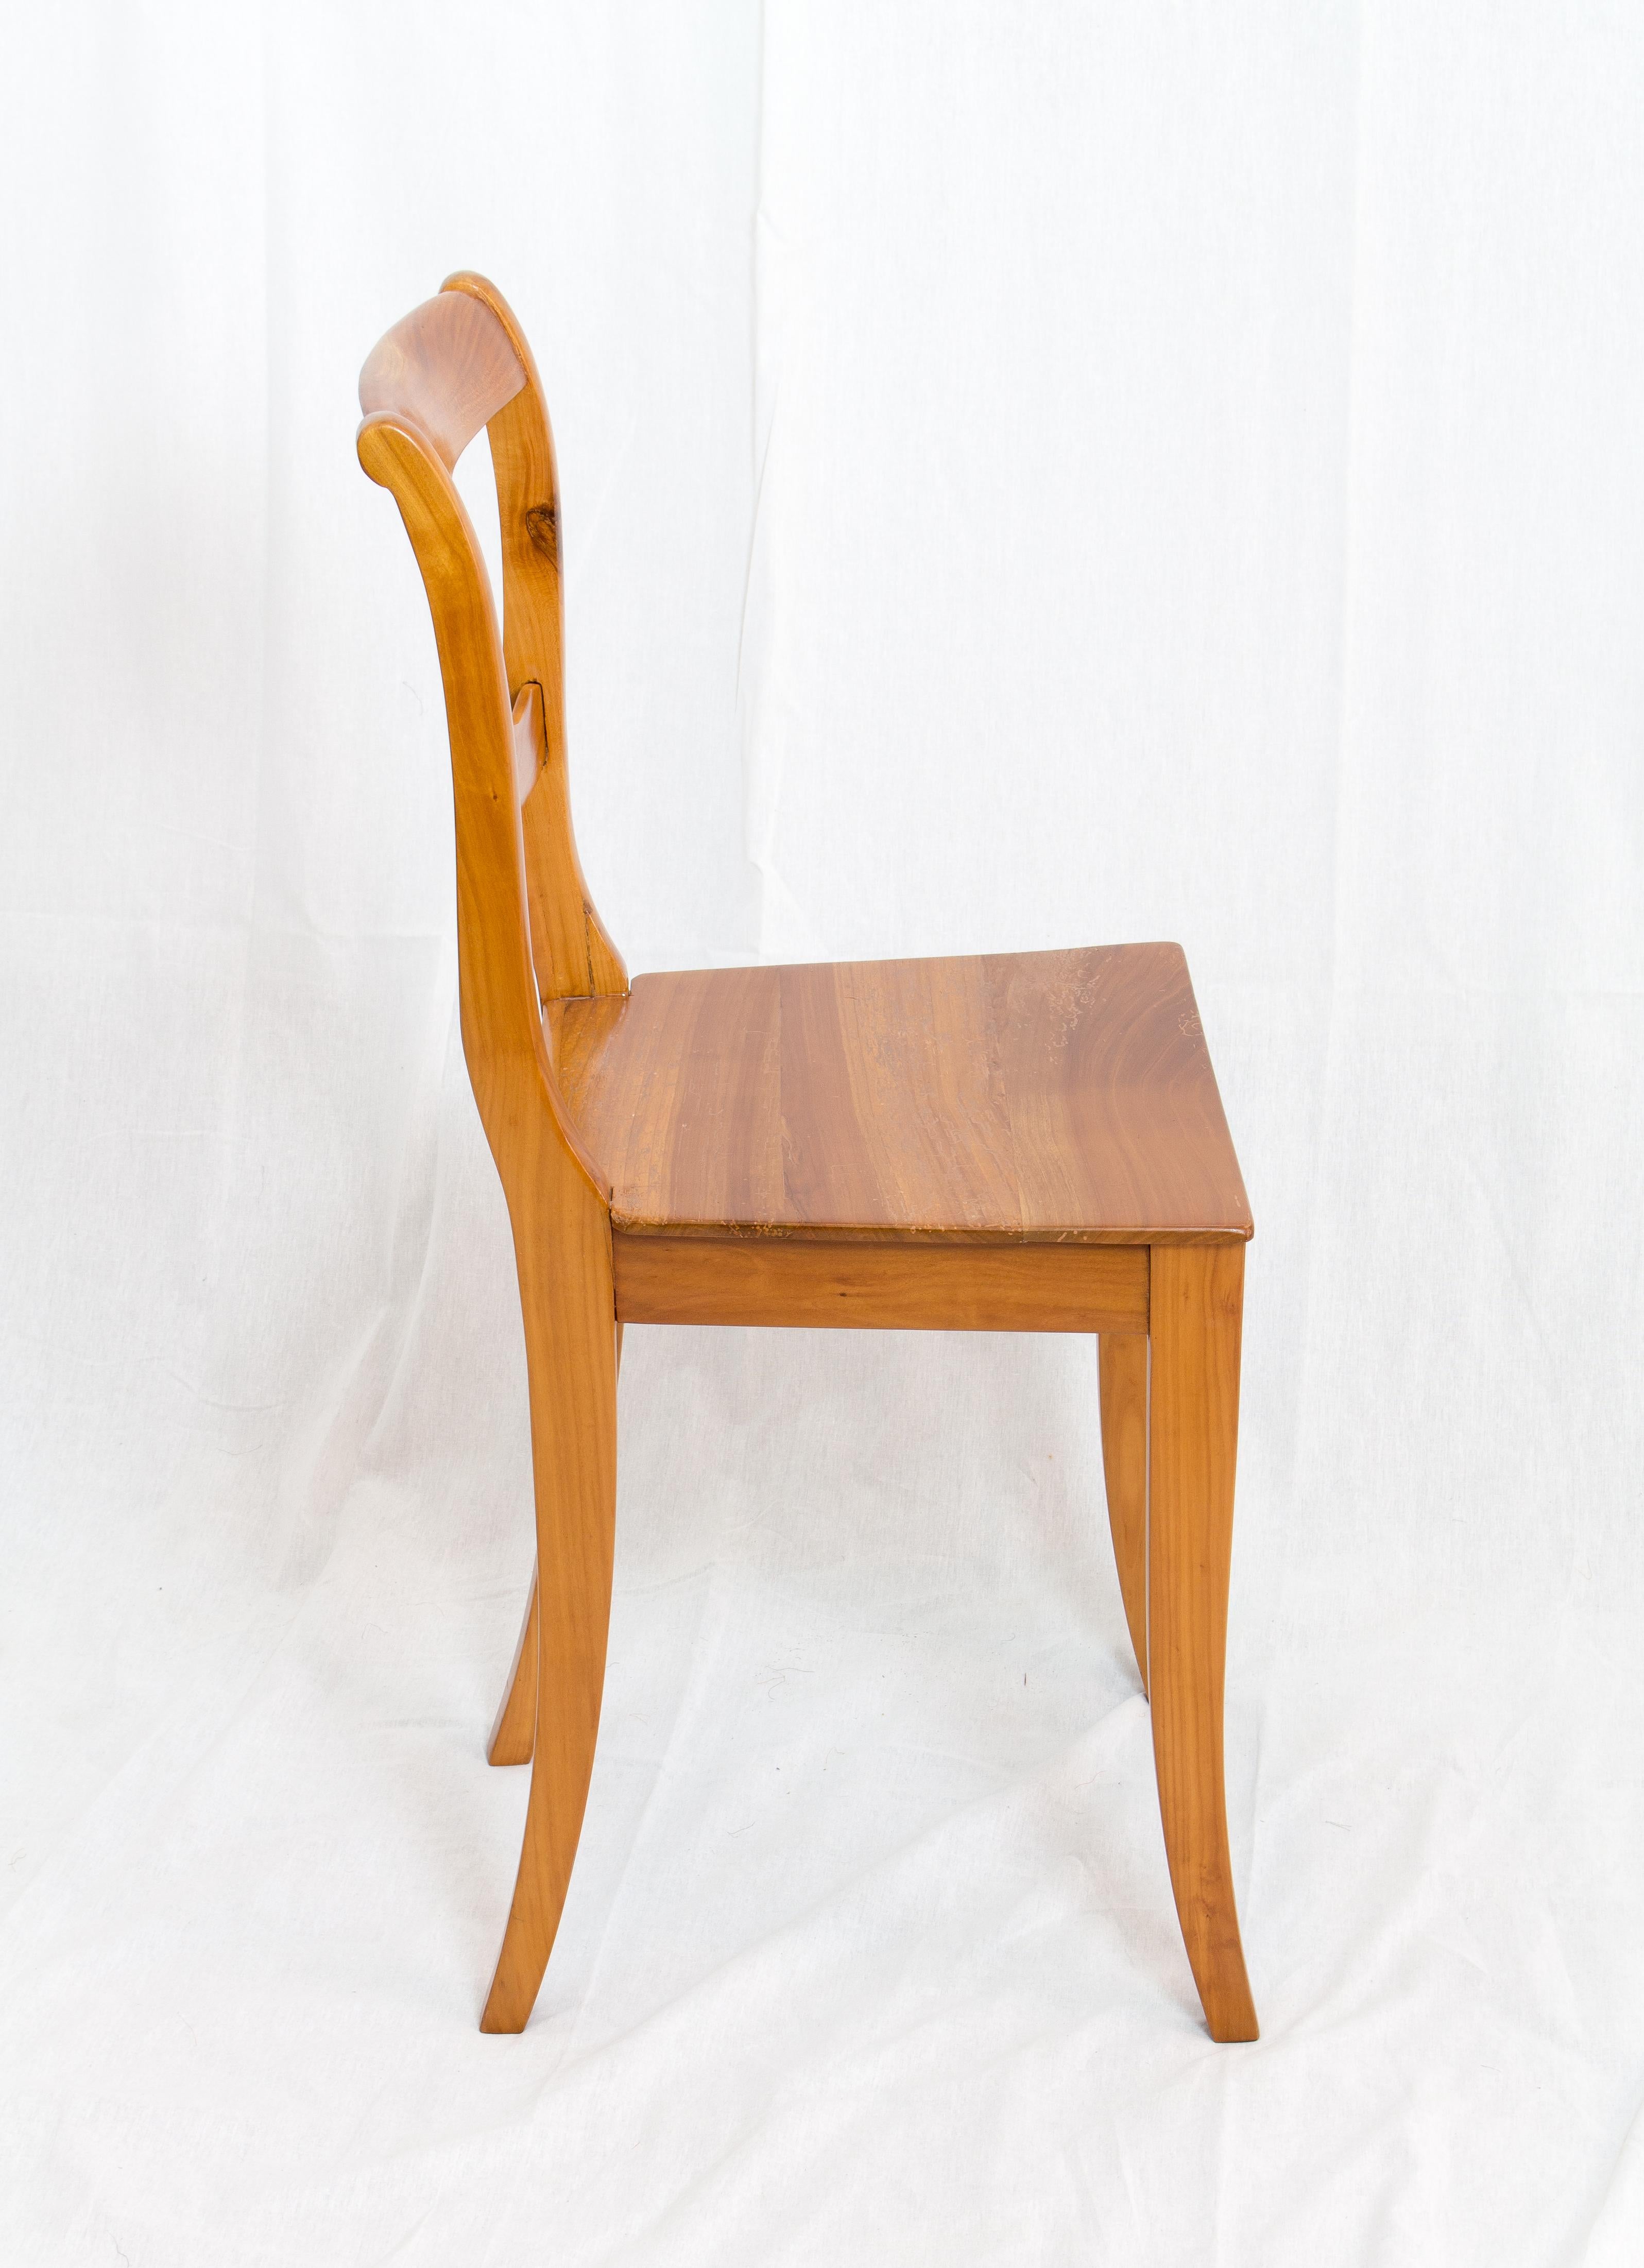 German 19th Century Biedermeier Cherrywood Chair For Sale